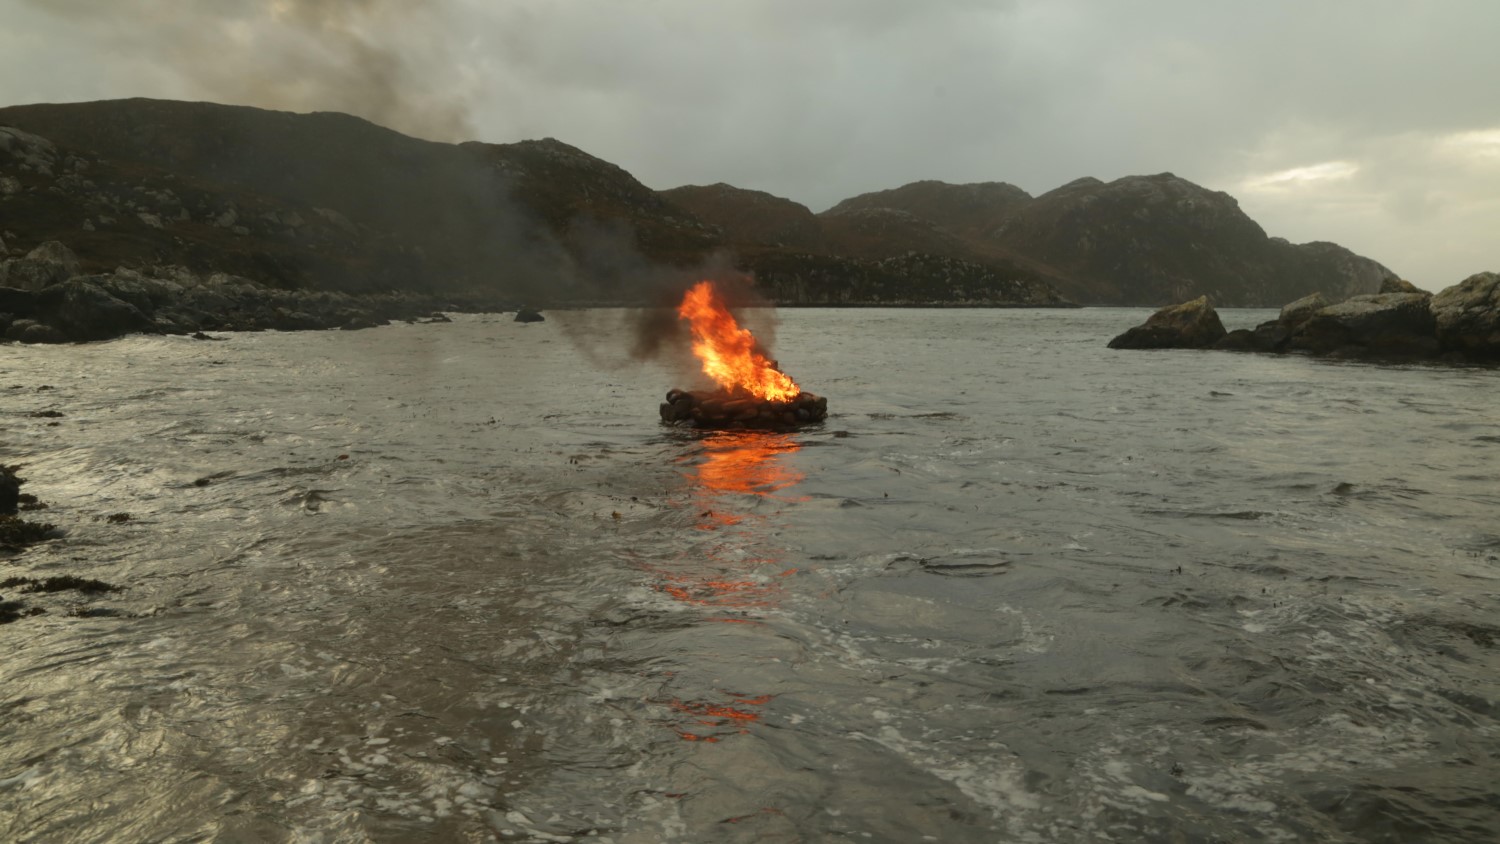 `Firestack, Winter: Aird Bheag, outer Hebrides, 2015. By Julie Brook